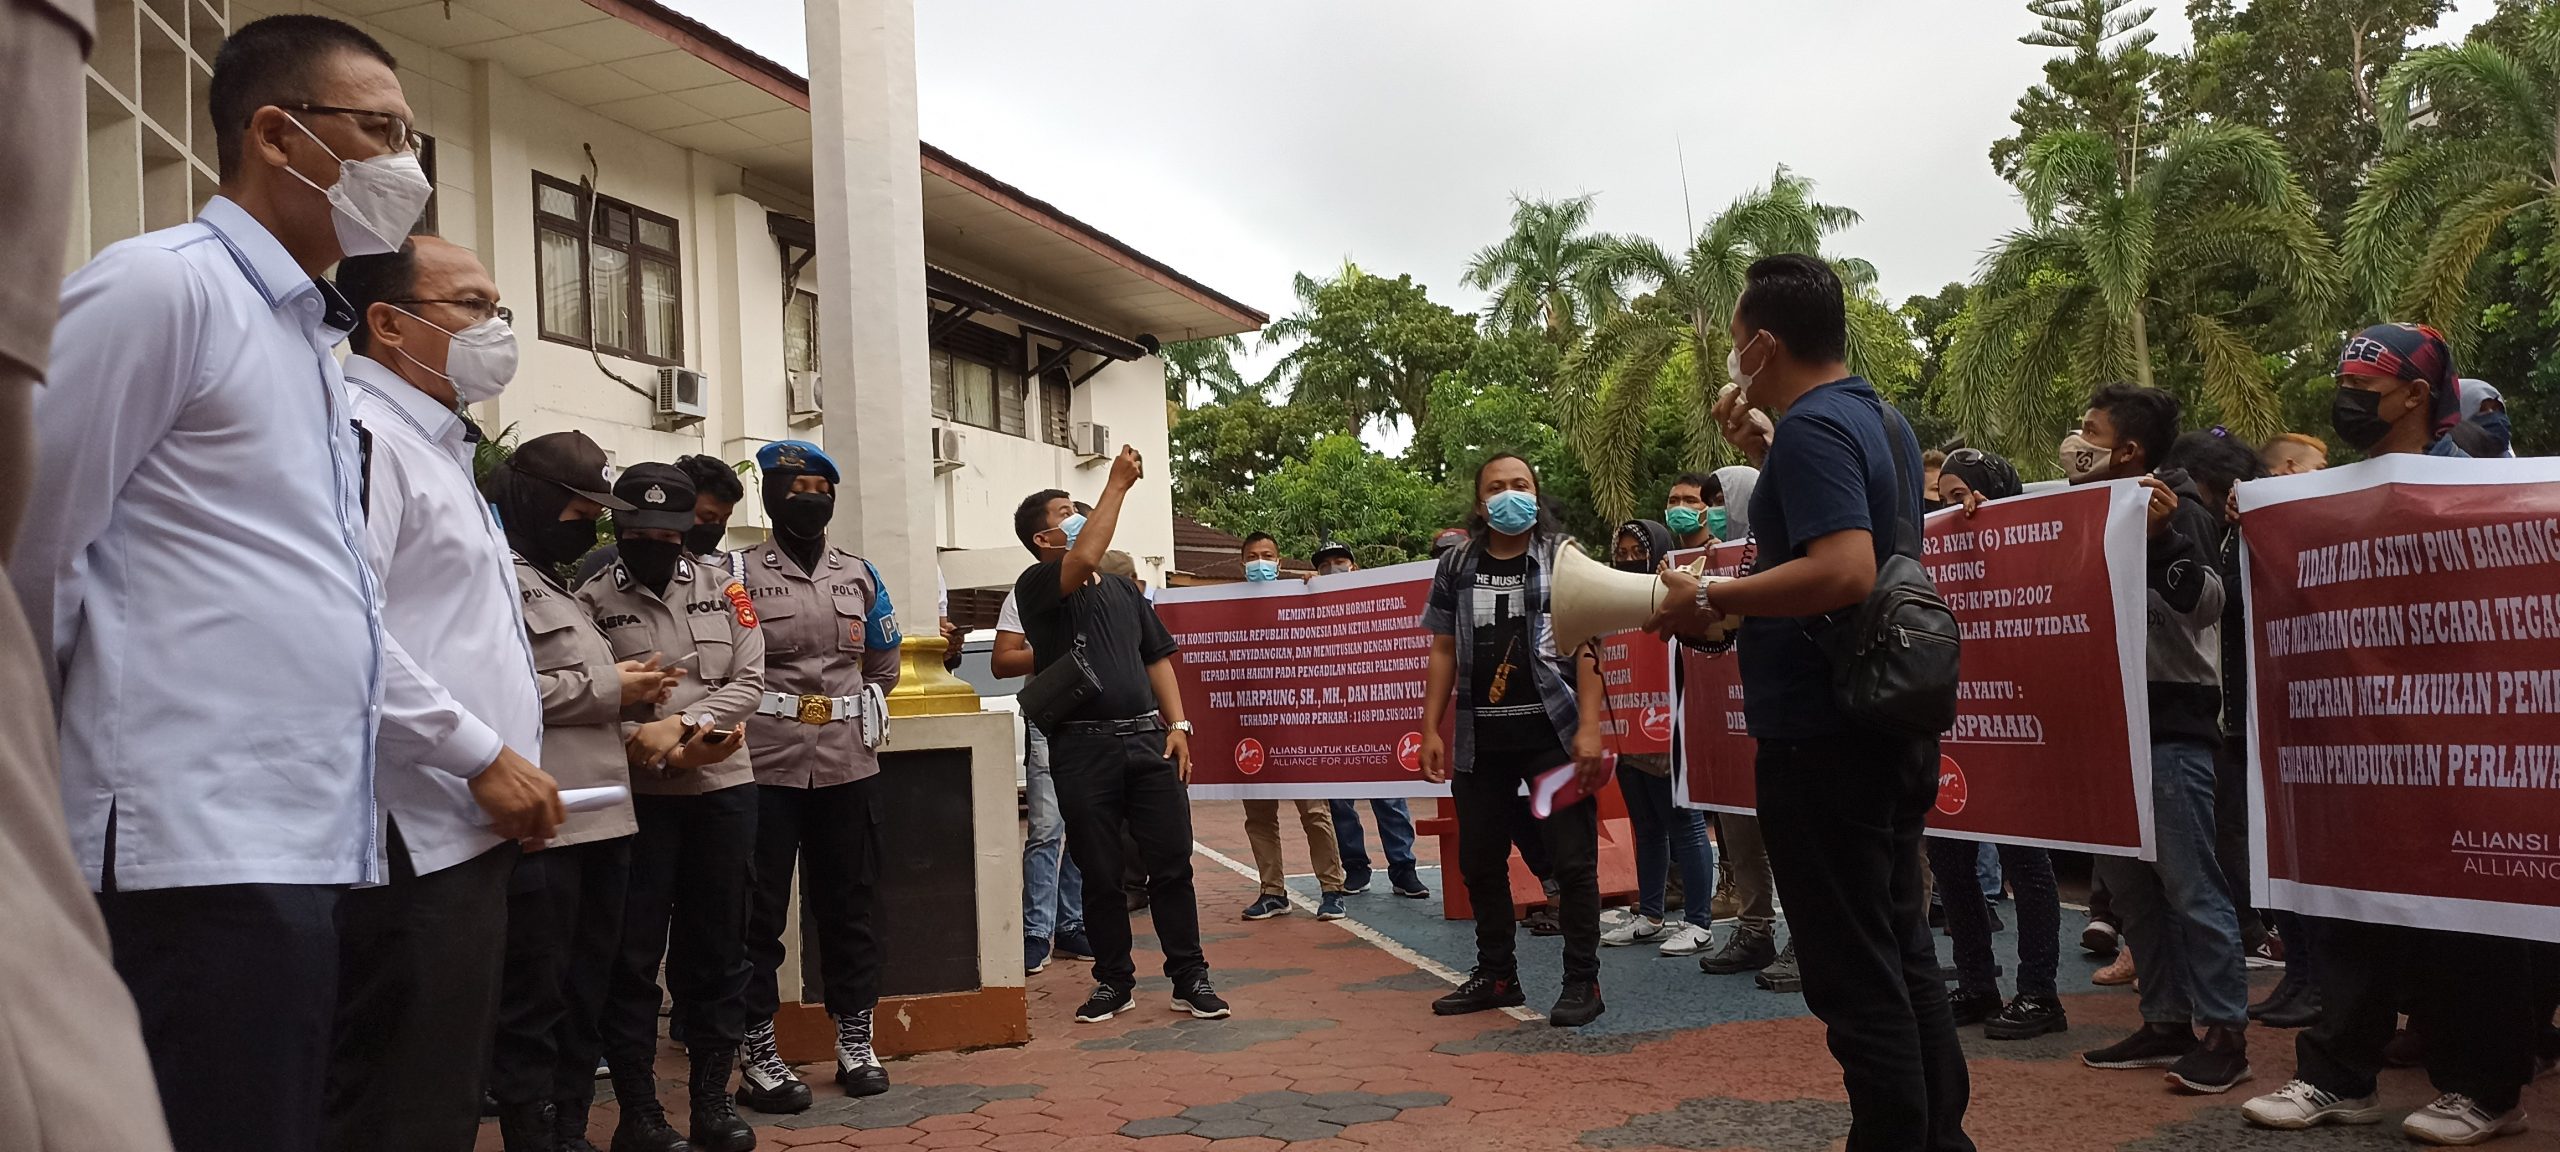 Massa Aksi Aliansi untuk Keadilan menggelar aksi di depan halaman Pengadilan Negeri Palembang, Senin [10/1/2022].